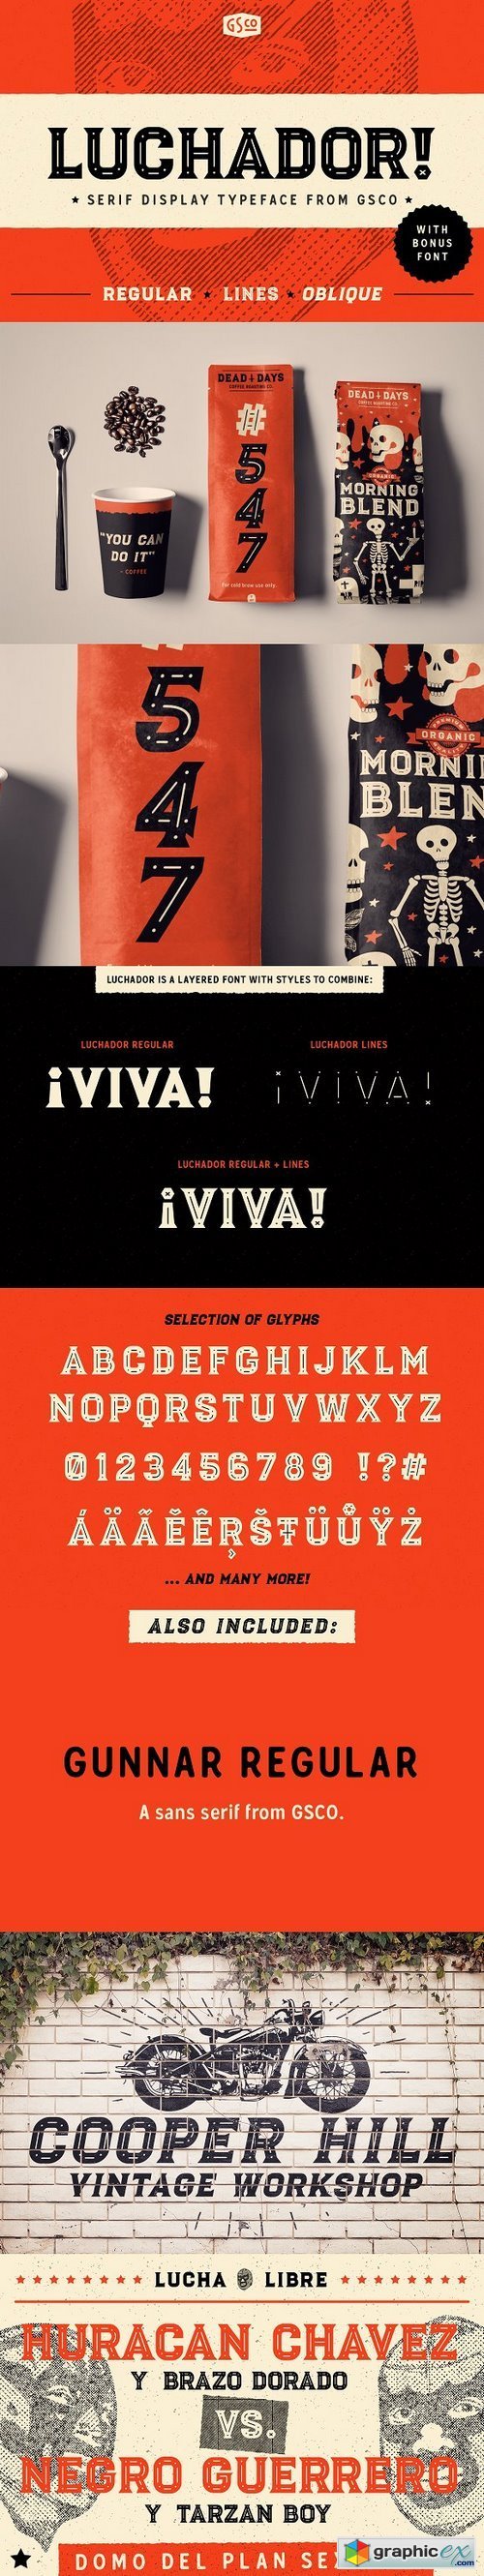 Luchador - Serif display typeface